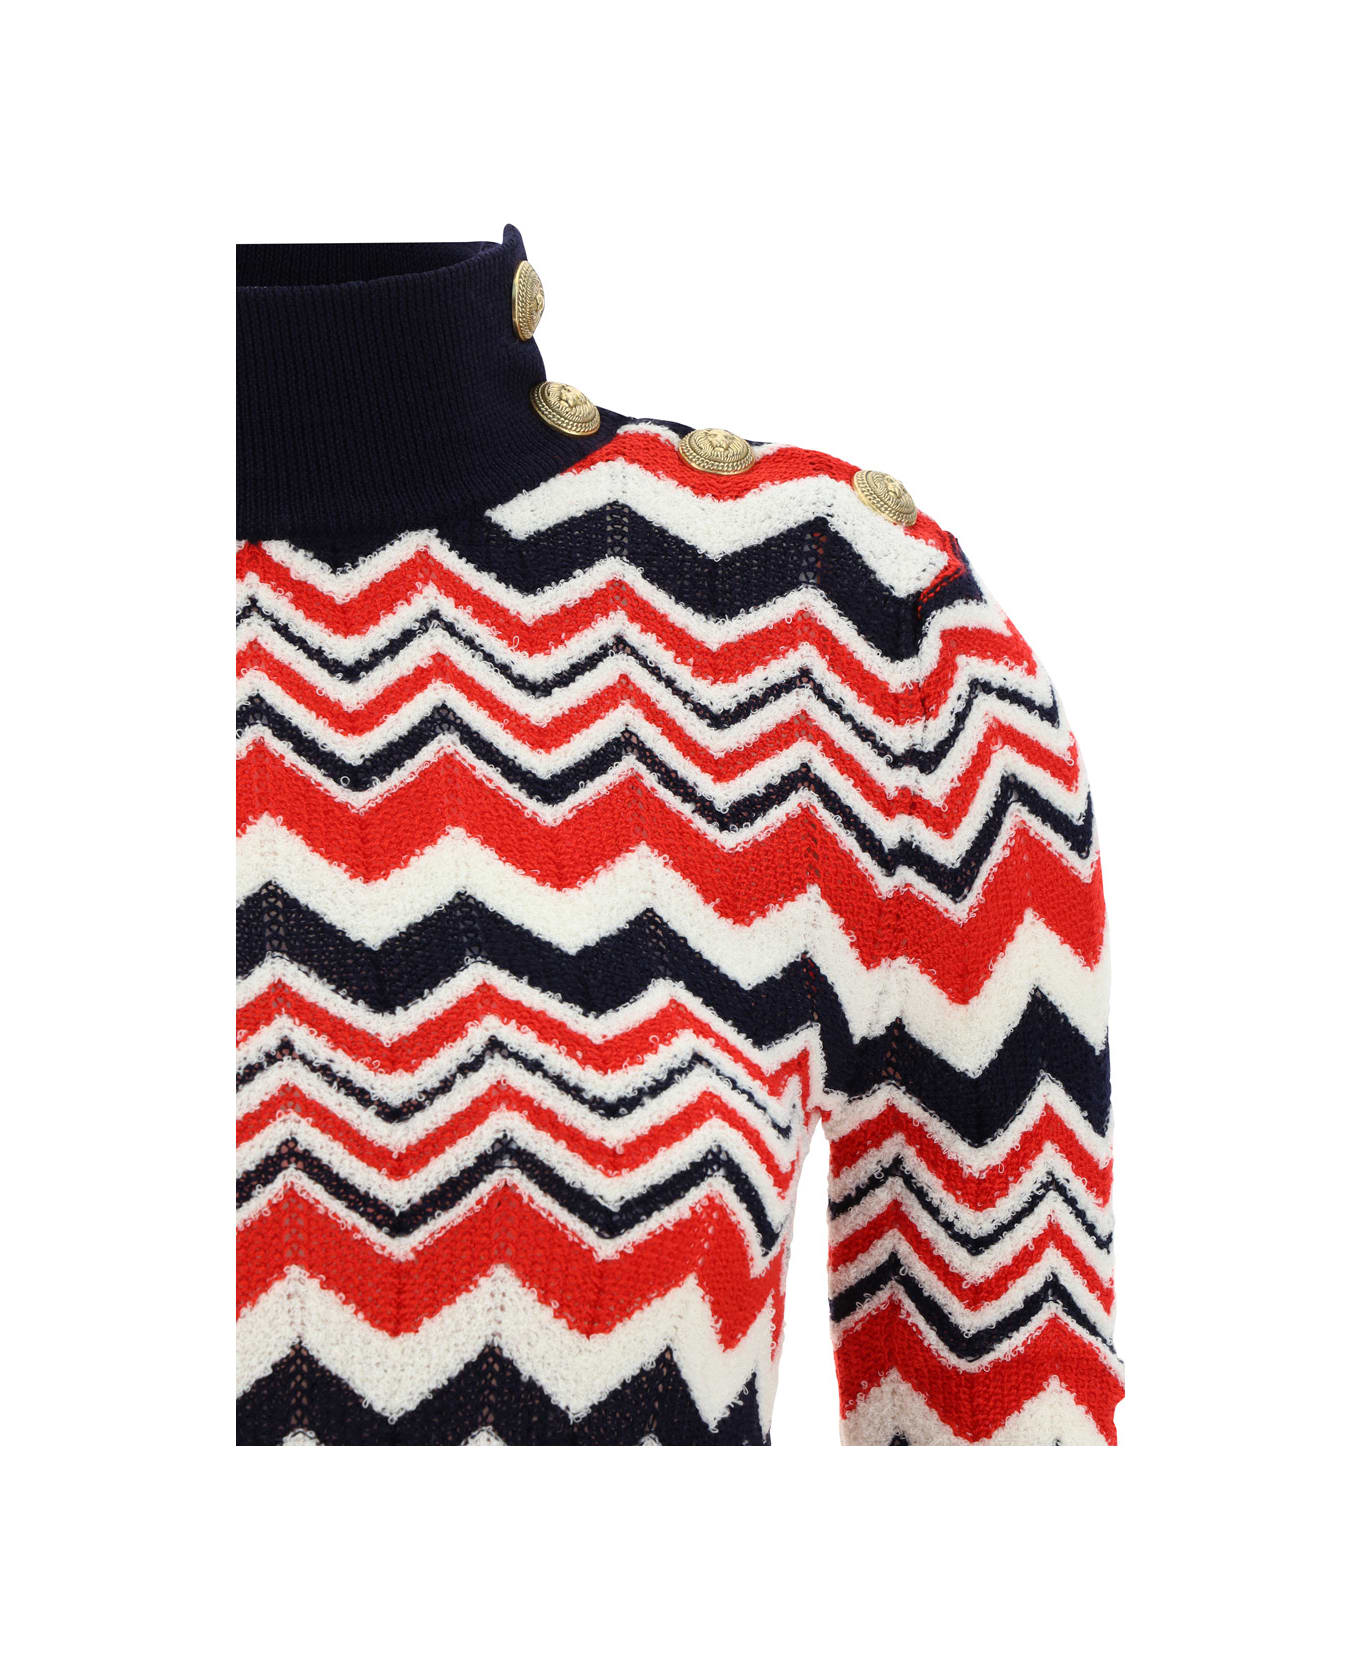 Balmain Turtleneck Sweater - Balmain Leather Coats